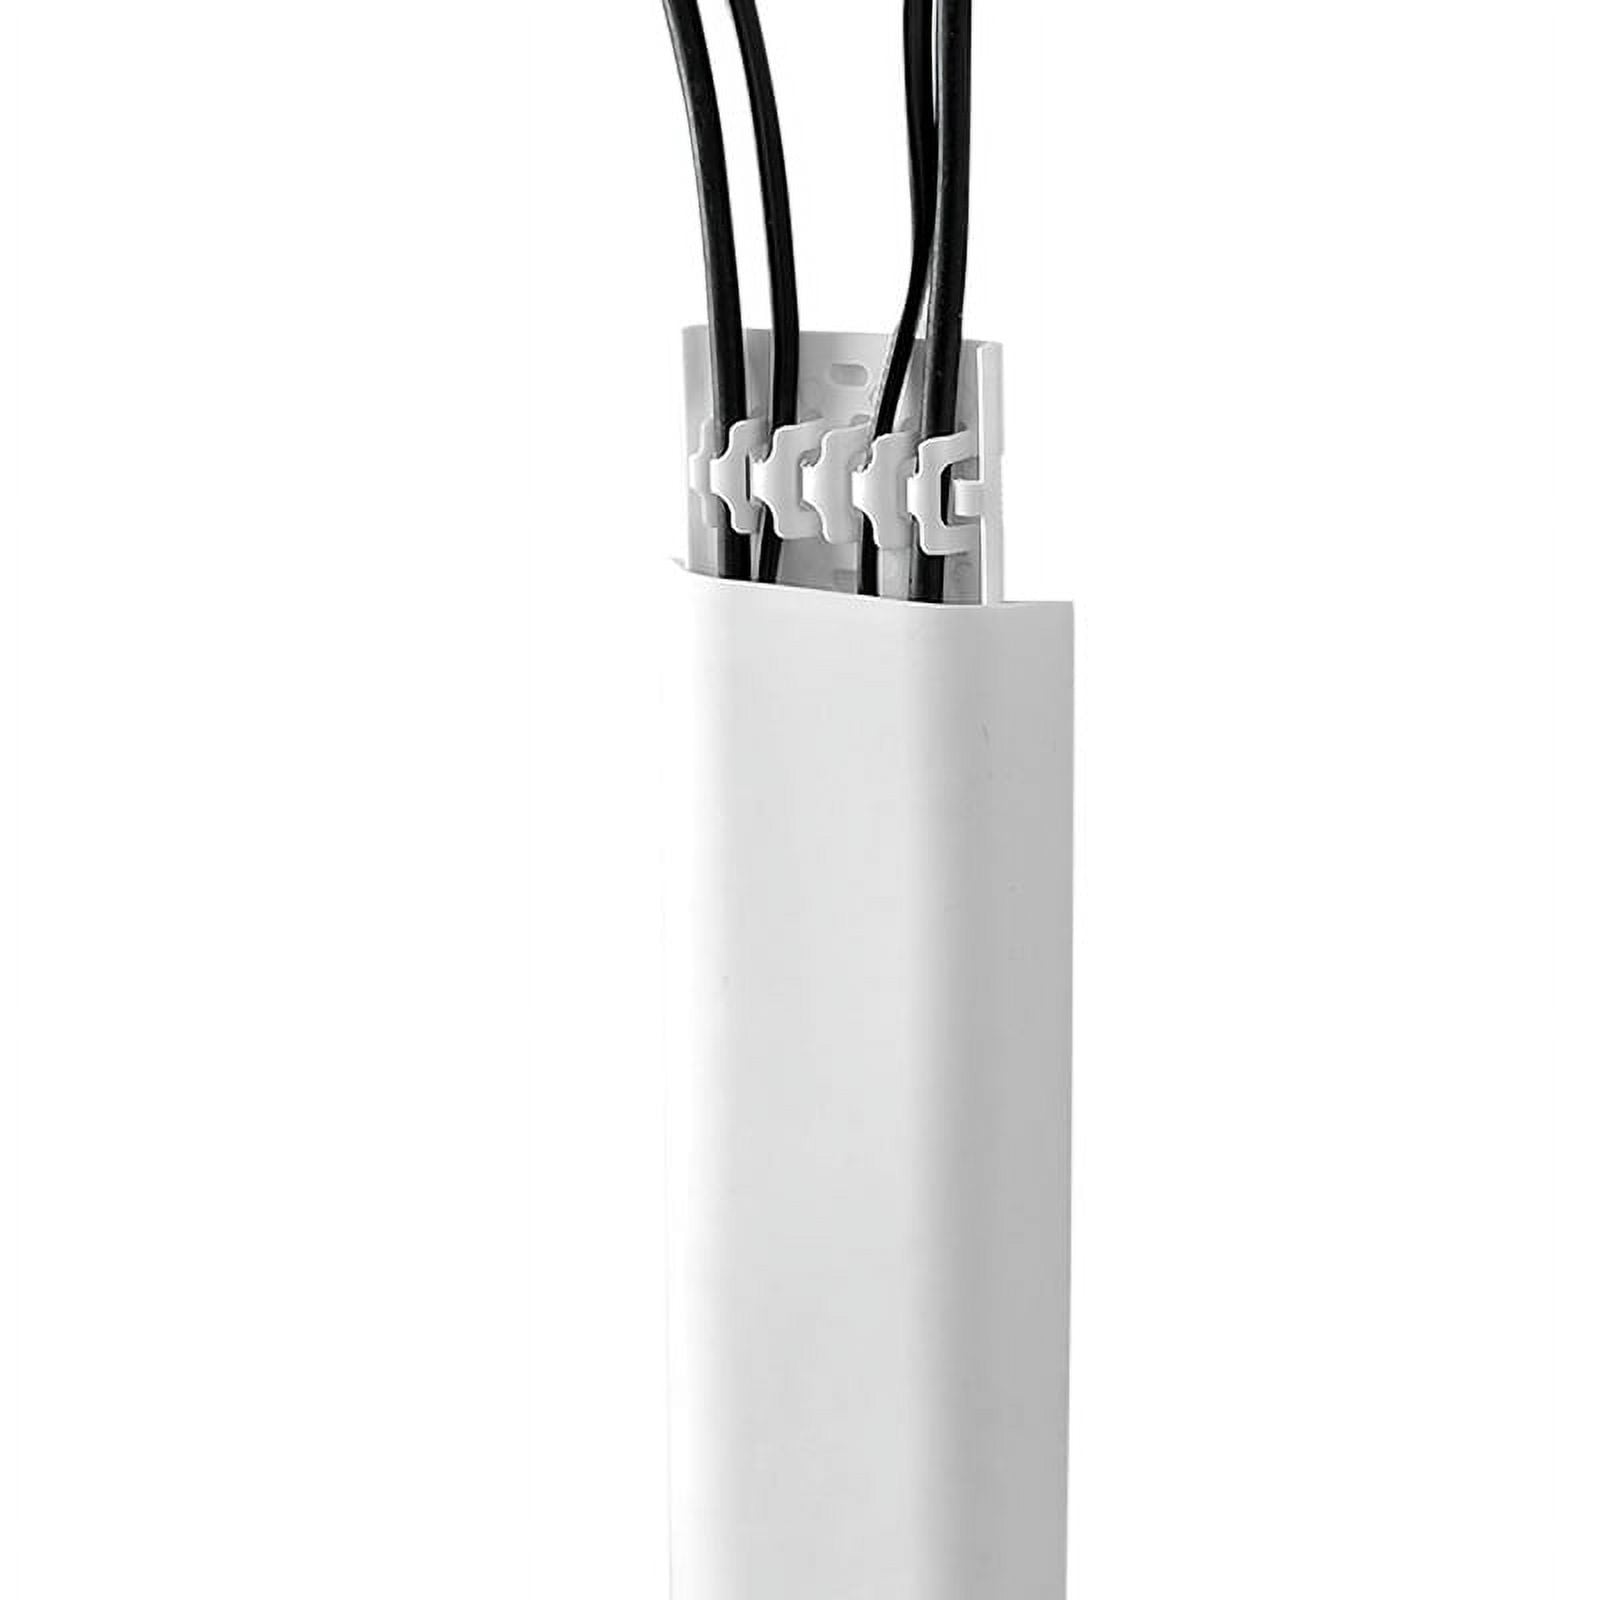 Cord Hider, Delamu 62.8in Cord Cover Cable Hider for Wall Mount TV, White 